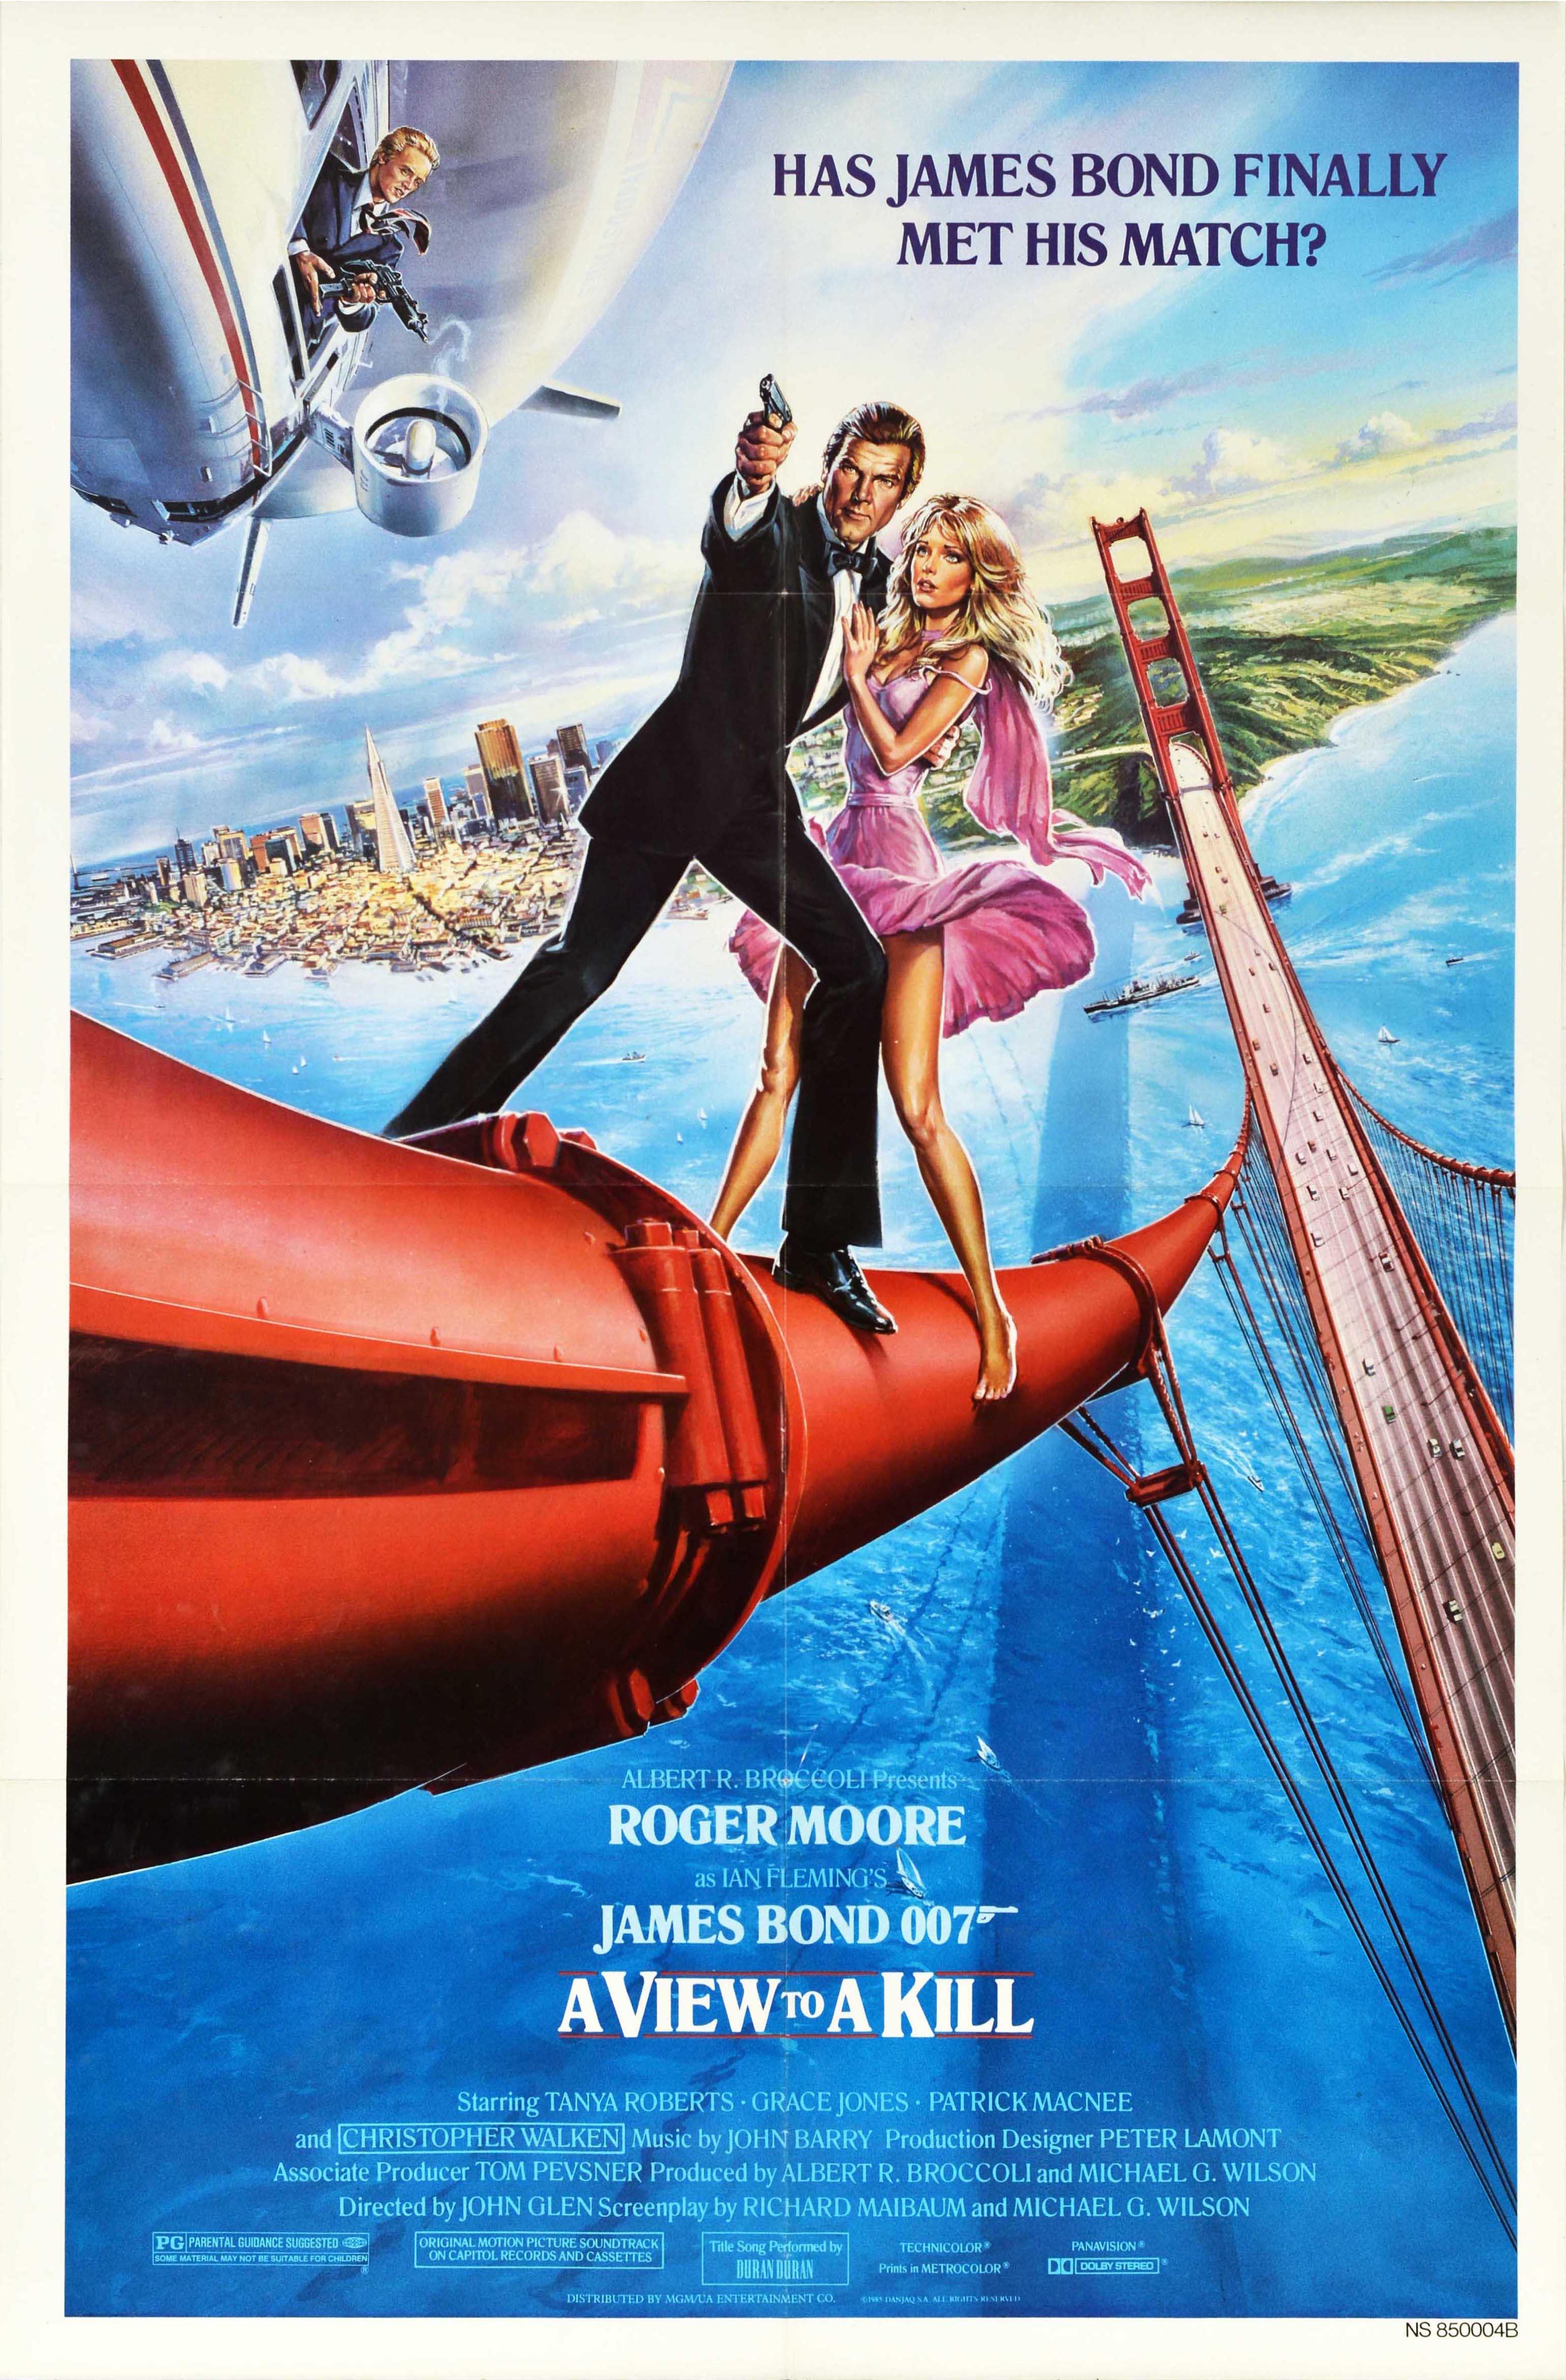 Unknown Print – Original Vintage James Bond Poster A View To A Kill 007, Film Golden Gate Bridge, Original